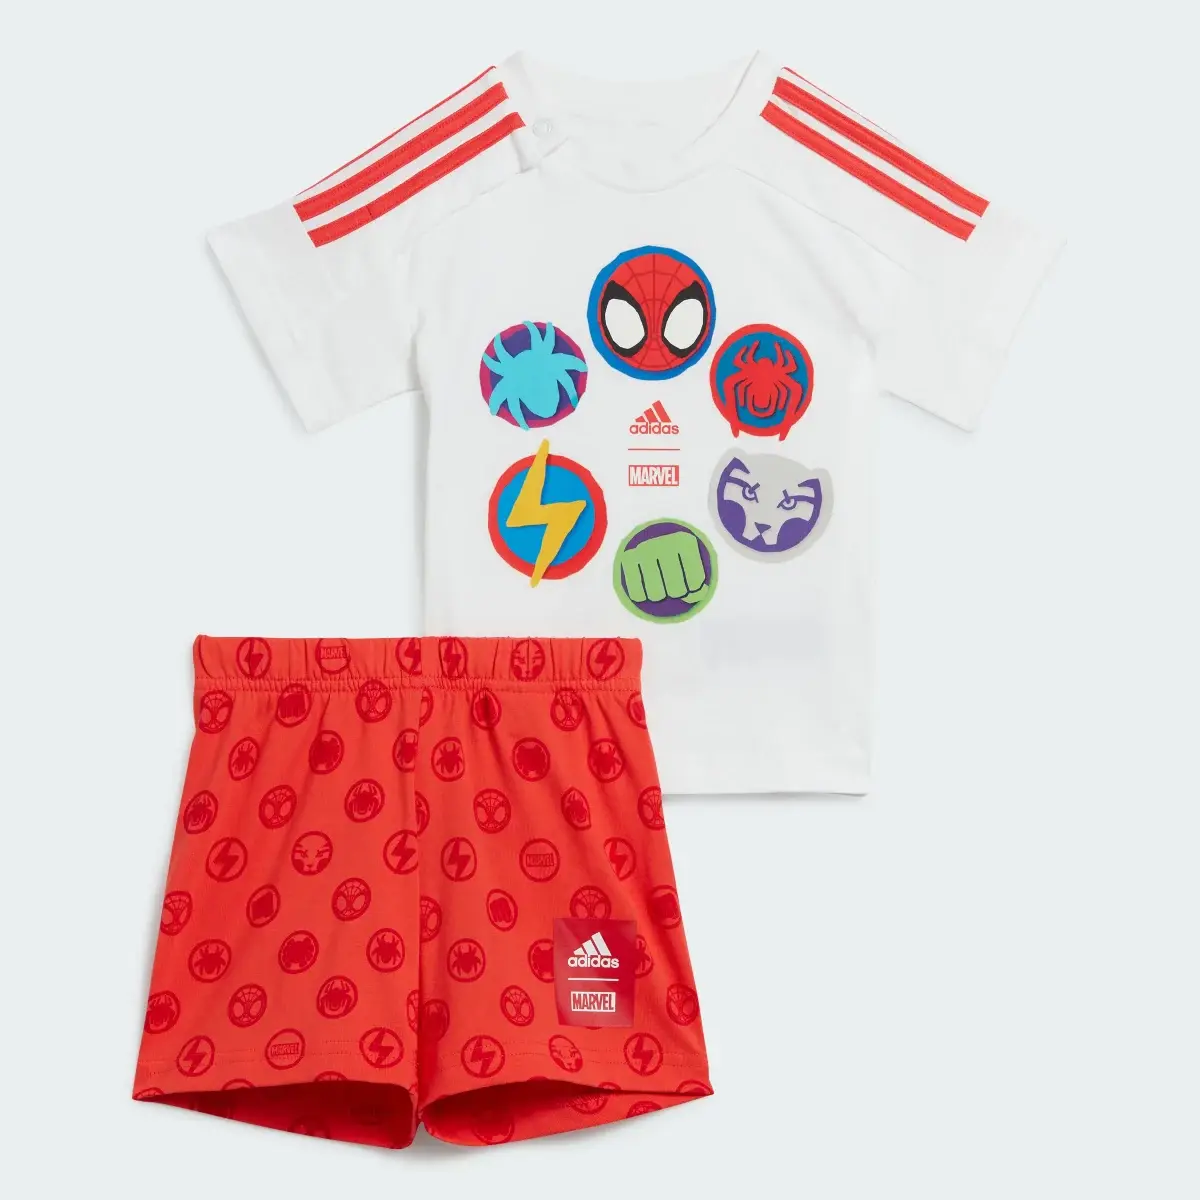 Adidas x Marvel Spider-Man Tişört ve Şort Takımı. 1